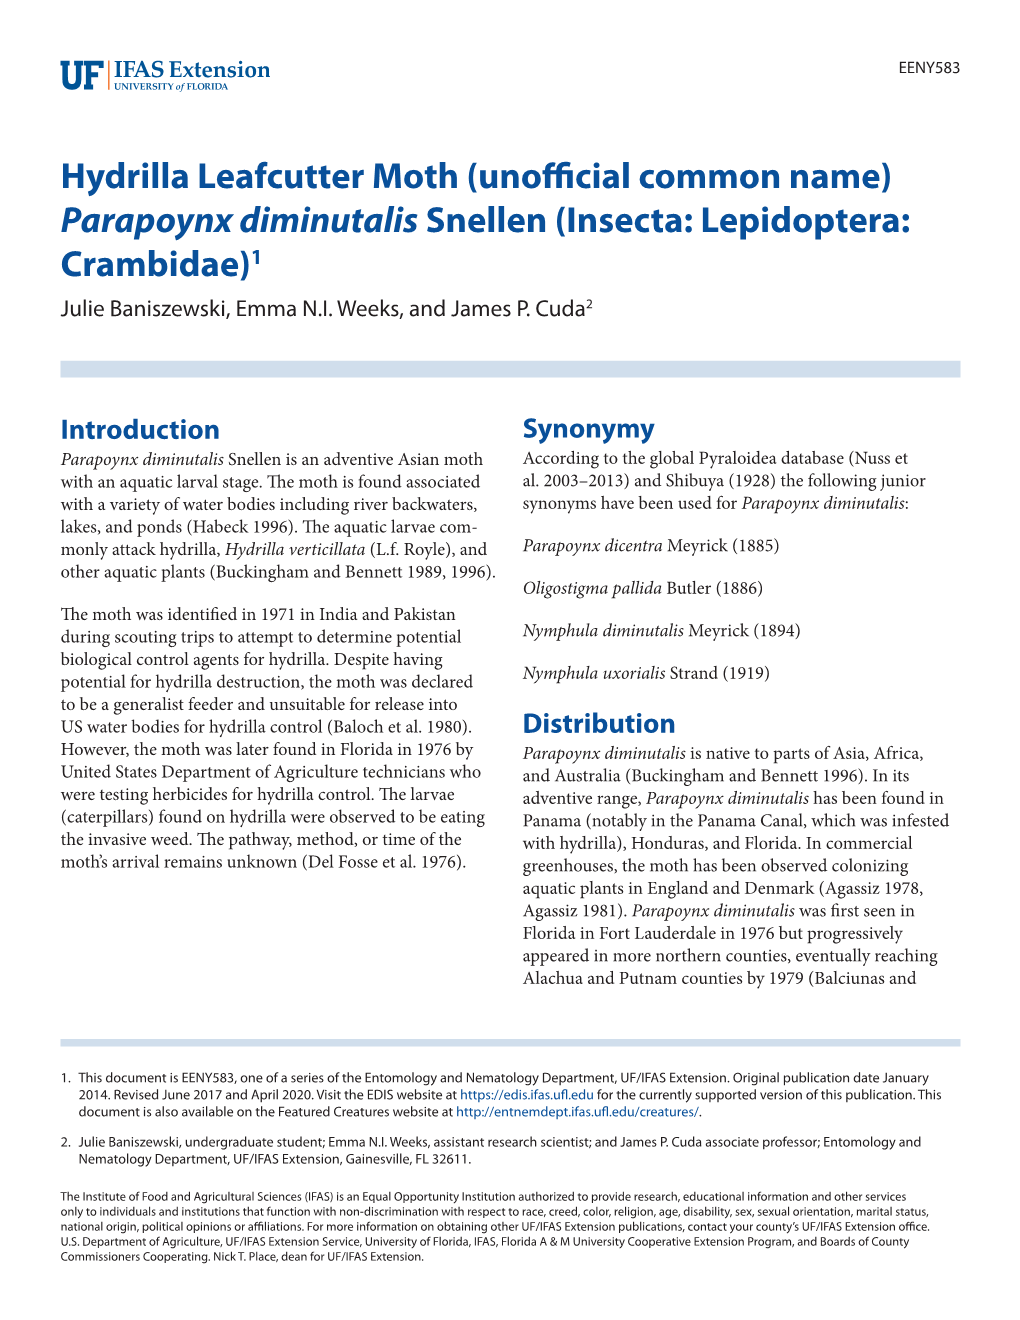 Hydrilla Leafcutter Moth (Unofficial Common Name) Parapoynx Diminutalis Snellen (Insecta: Lepidoptera: Crambidae)1 Julie Baniszewski, Emma N.I